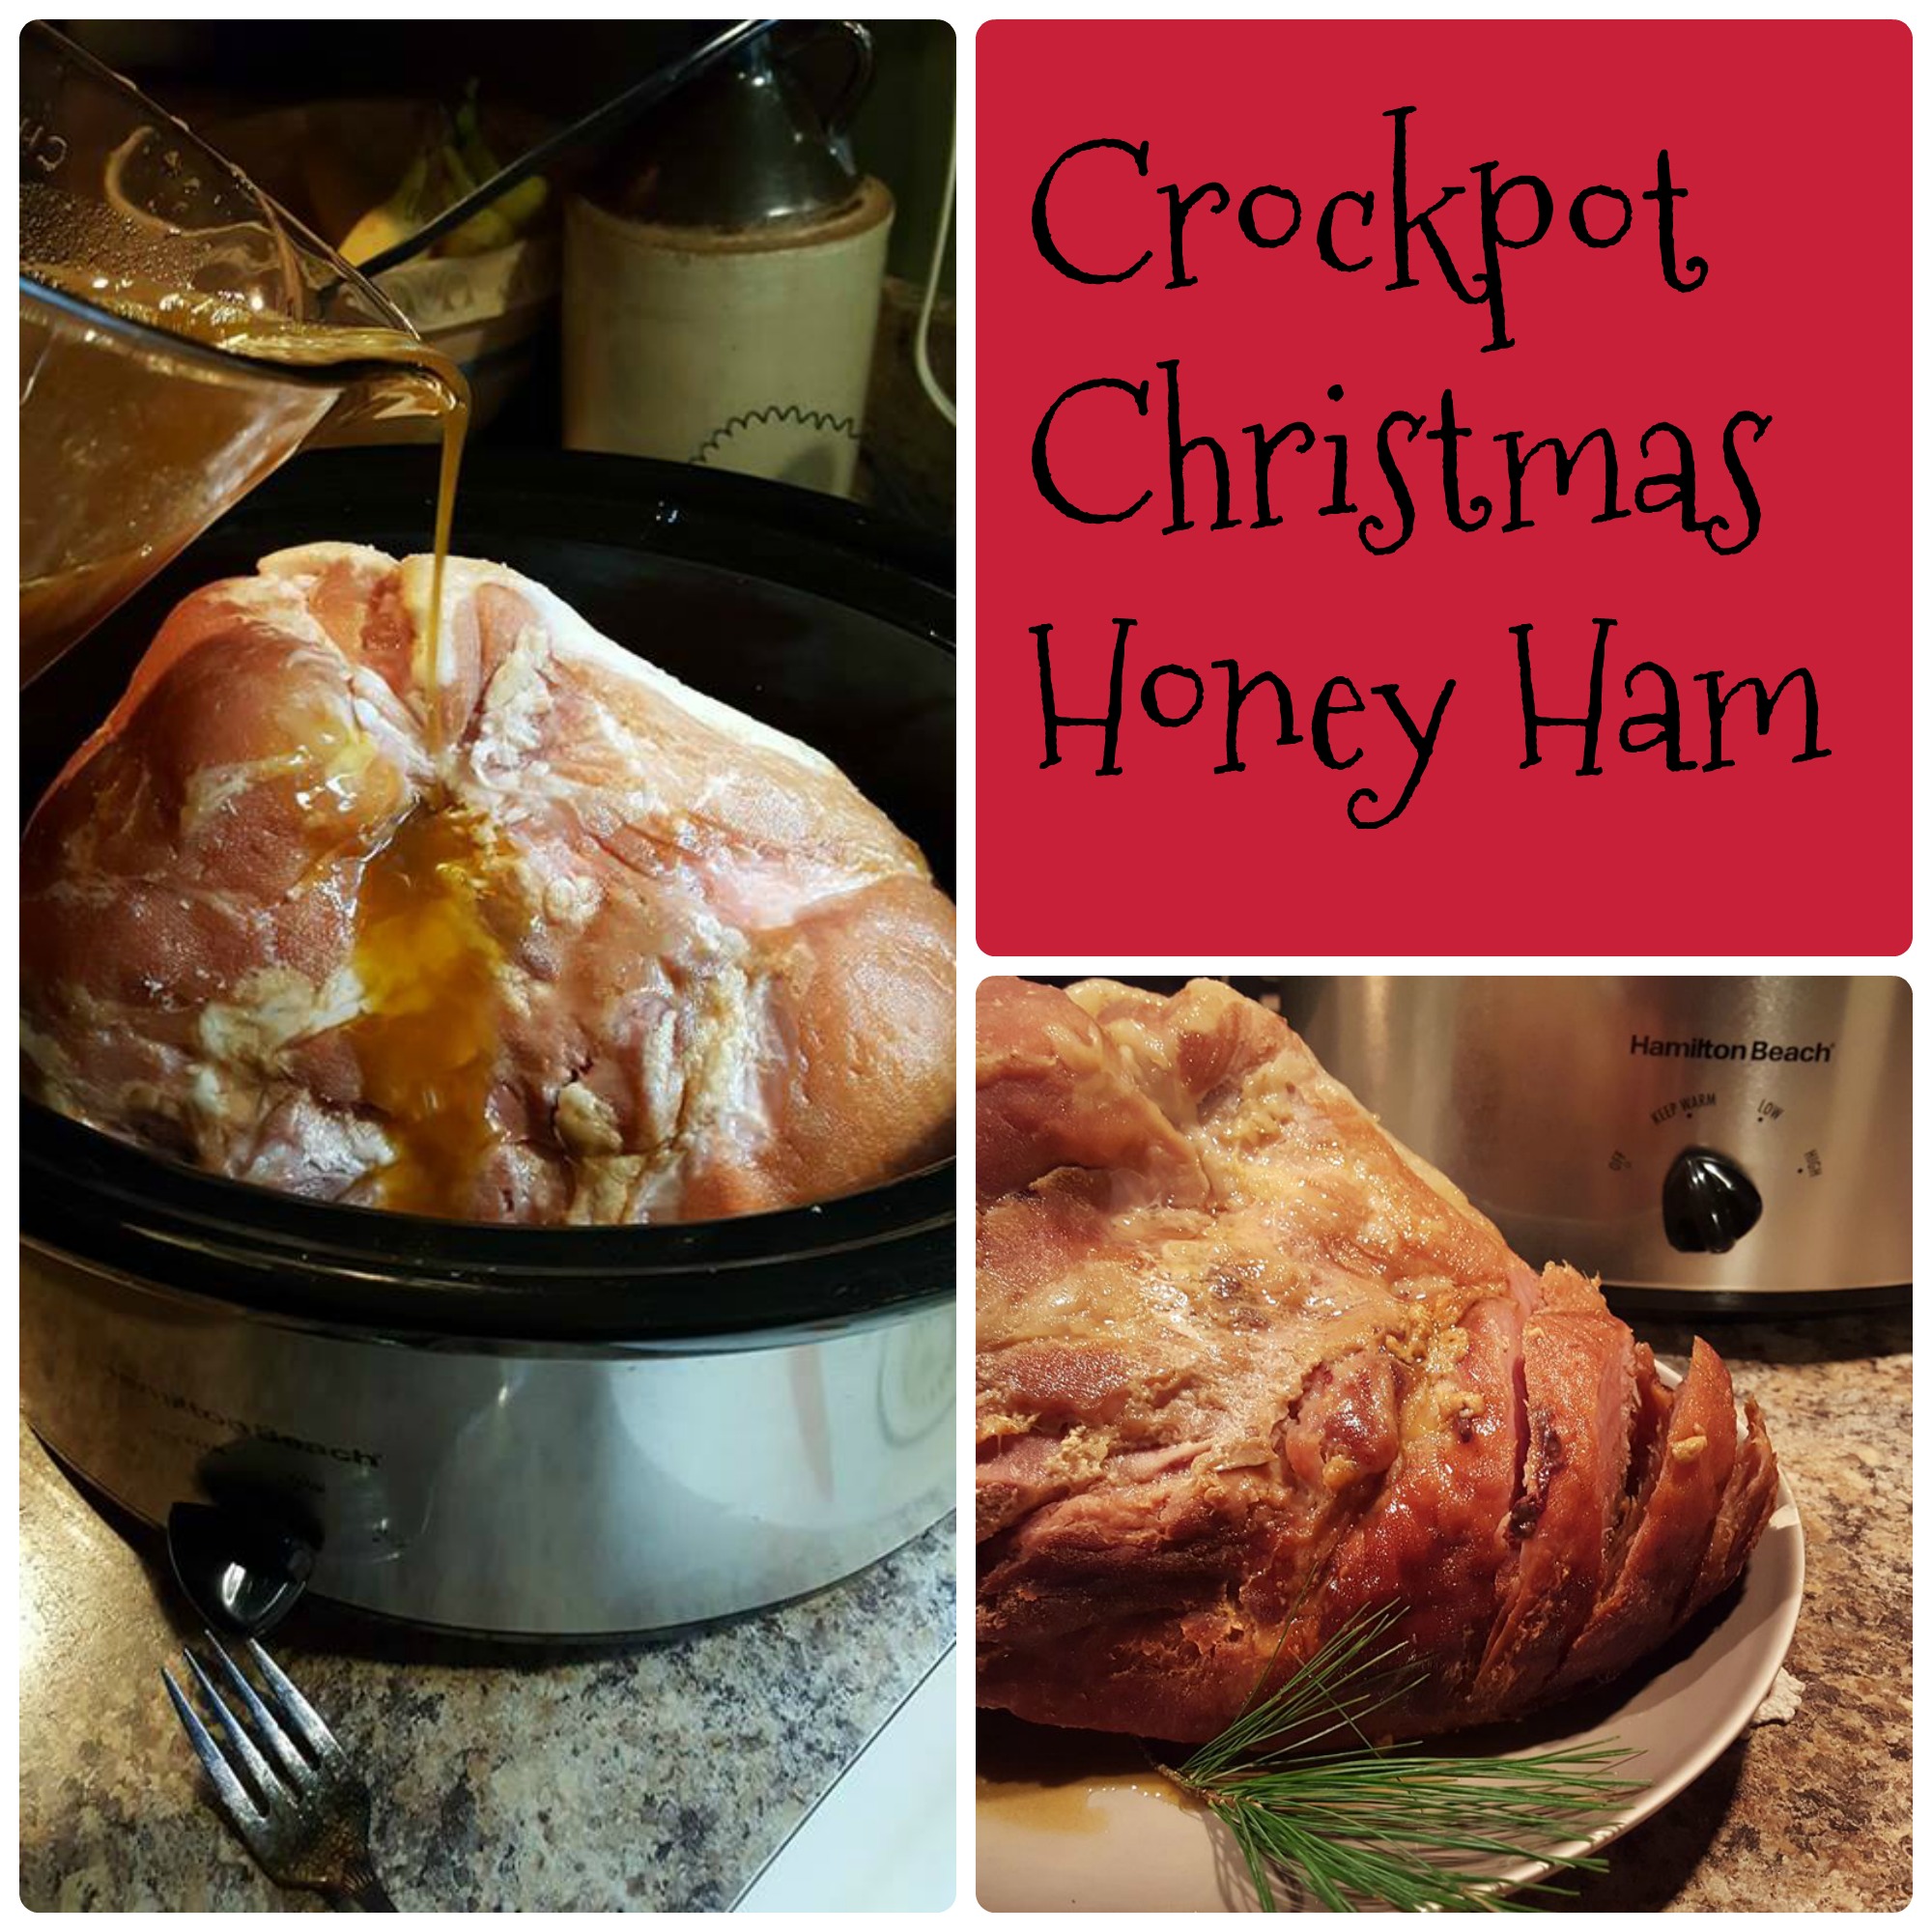 Crockpot Christmas Honey Ham